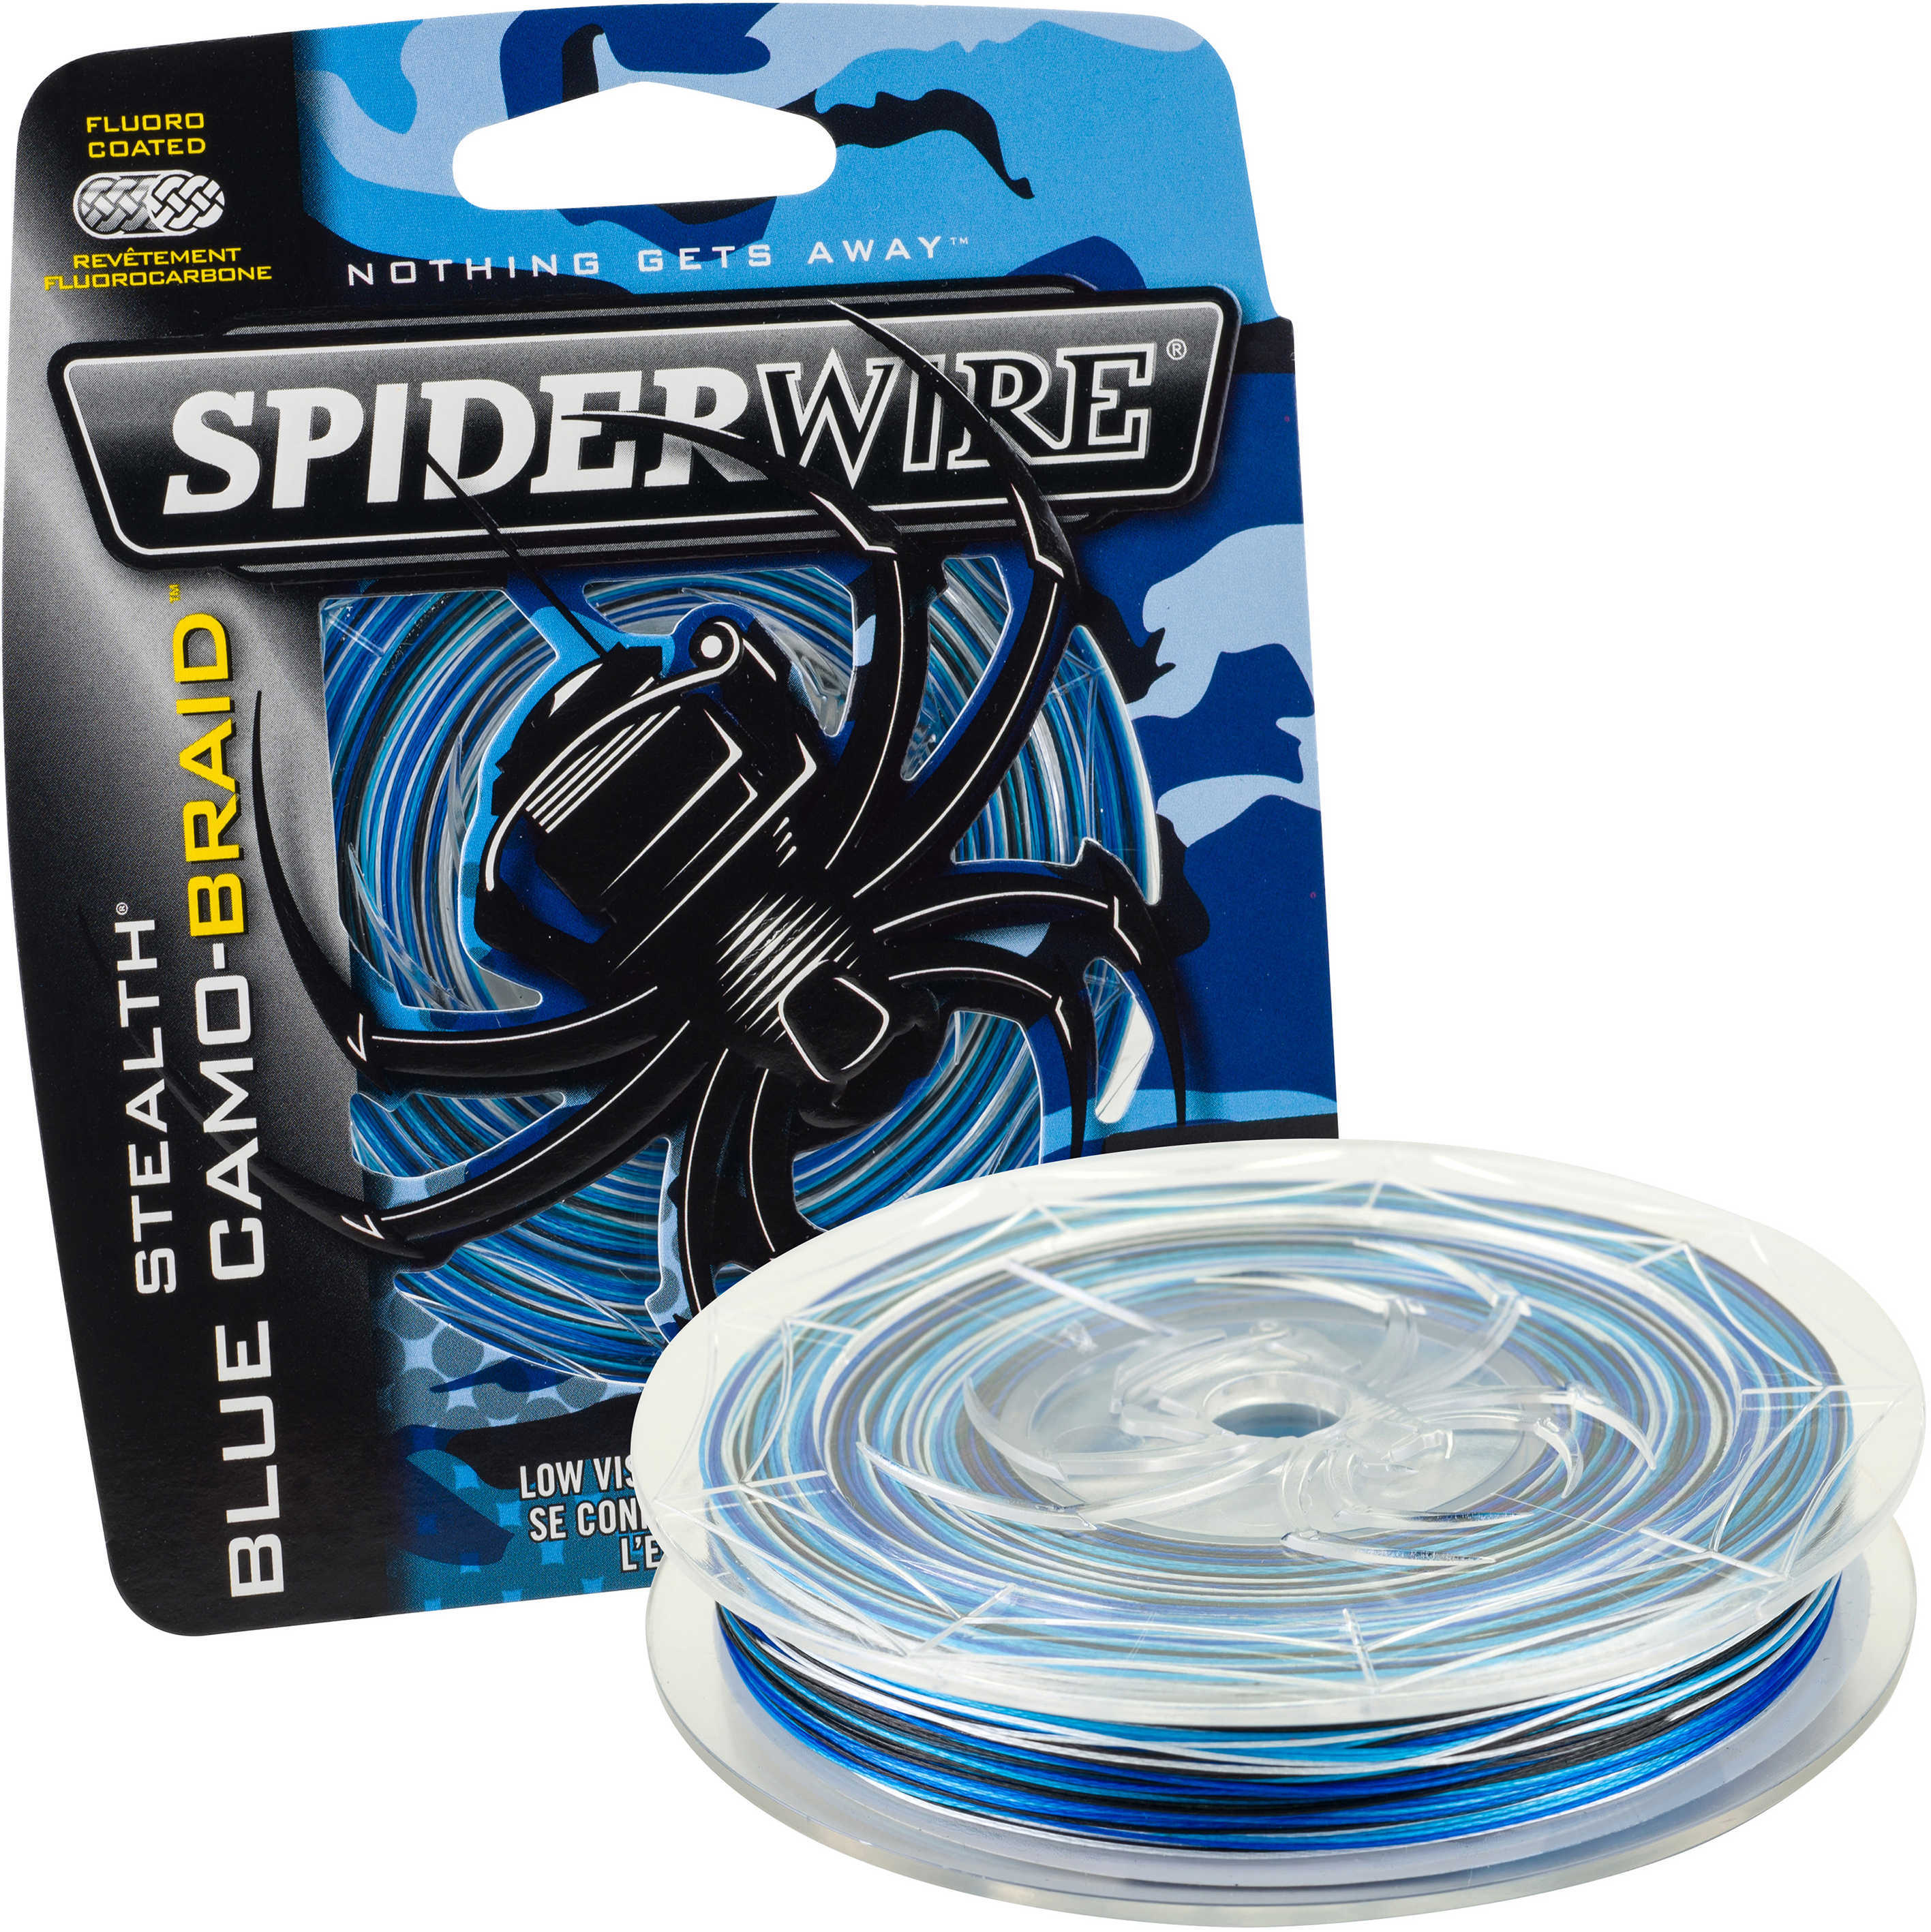 Spiderwire Stealth Braid 300 Yards , 10 lbs Strength, 0.008" Diameter, Blue Camo Md: 1370444